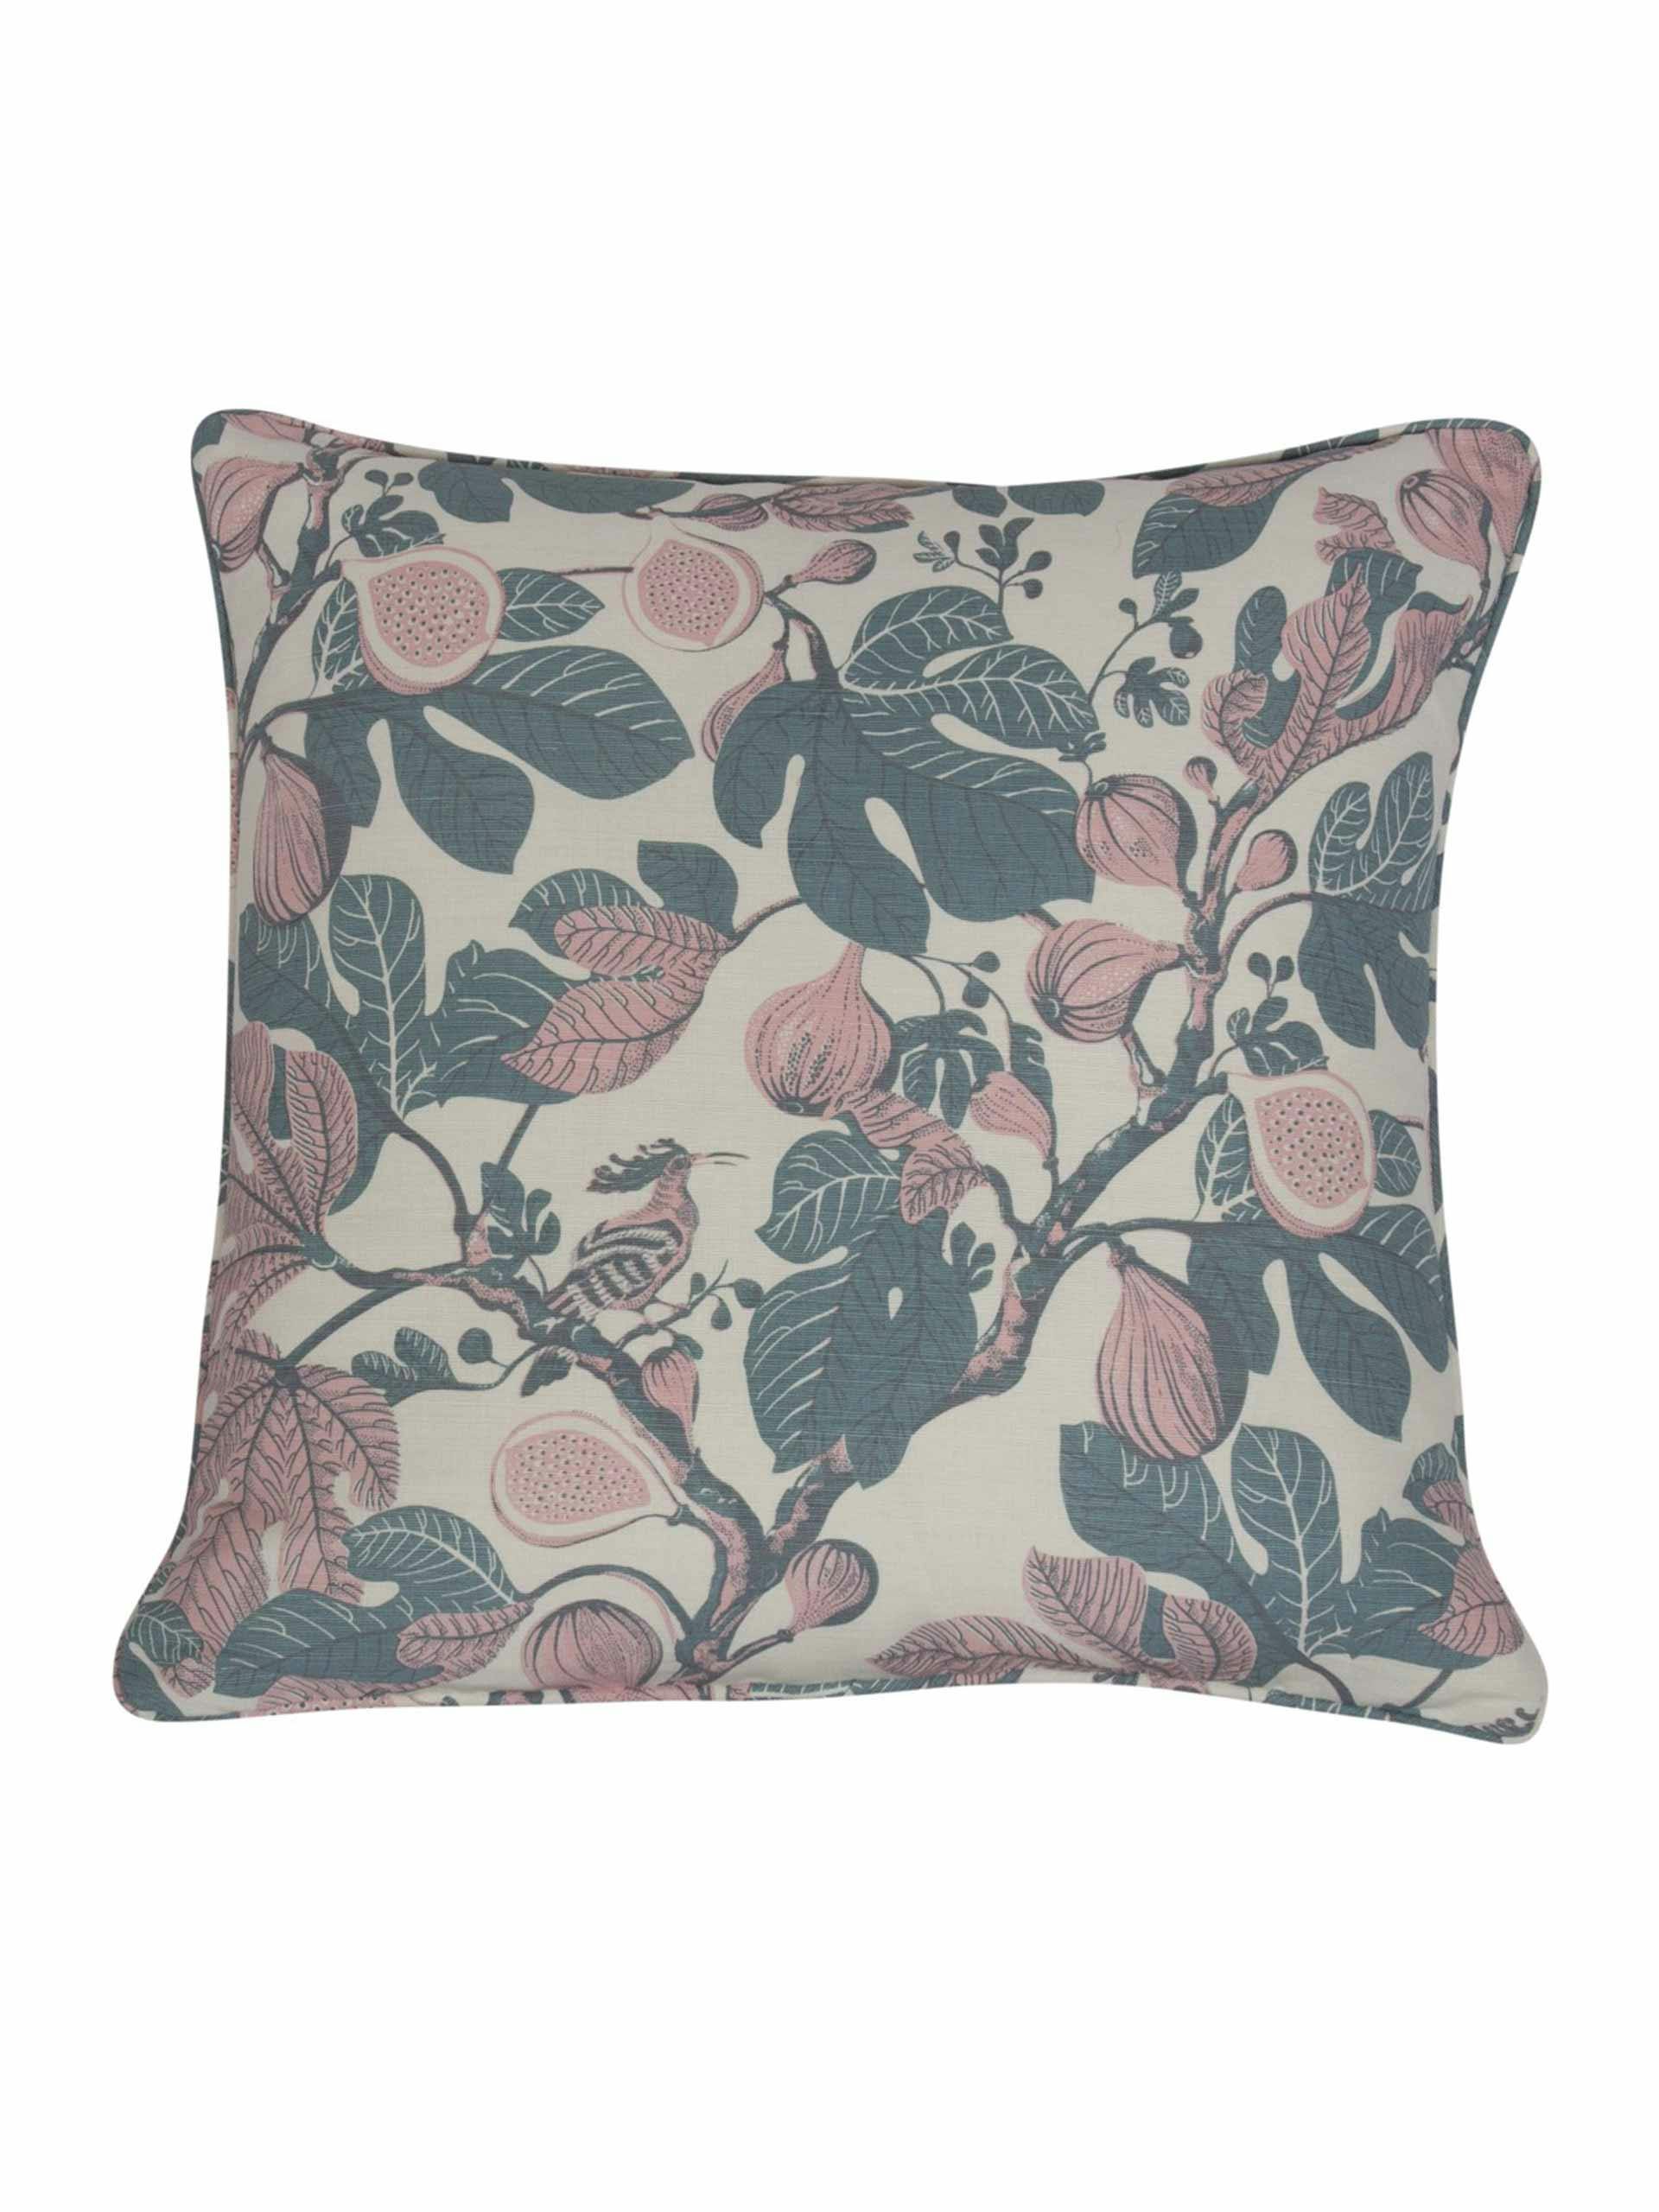 Hand printed fig motif cushion